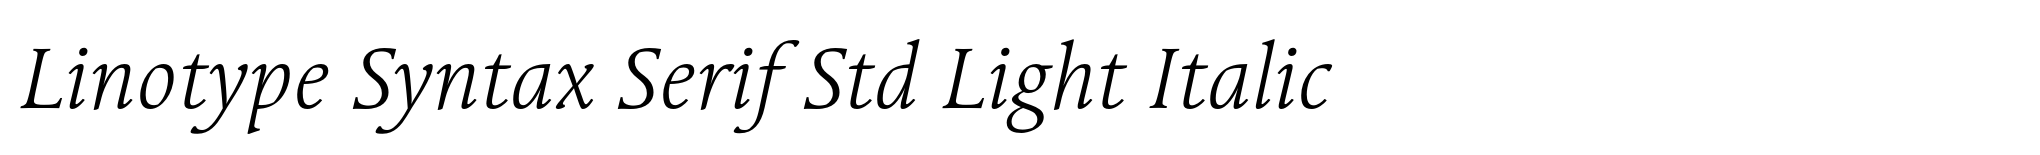 Linotype Syntax Serif Std Light Italic image